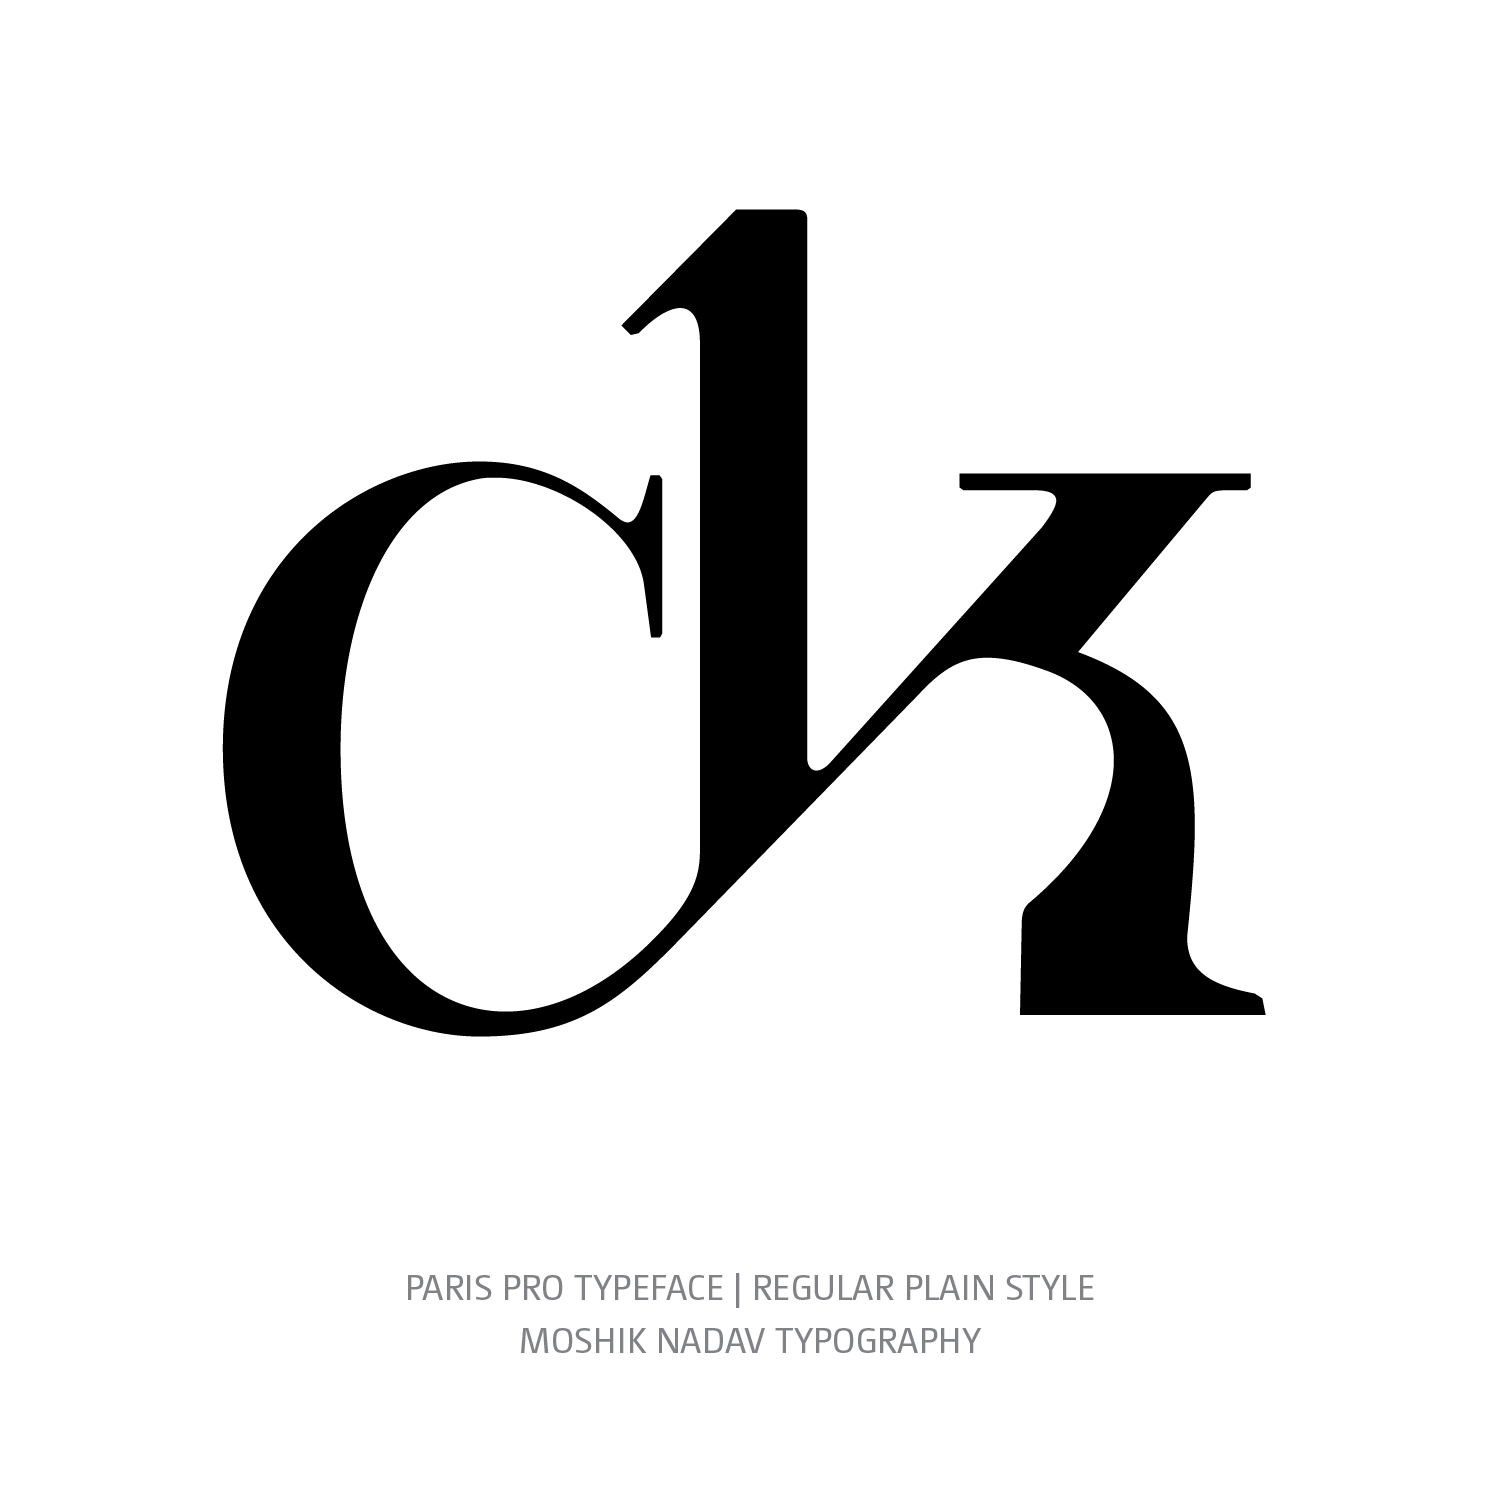 Paris Pro Typeface Regular ck ligature